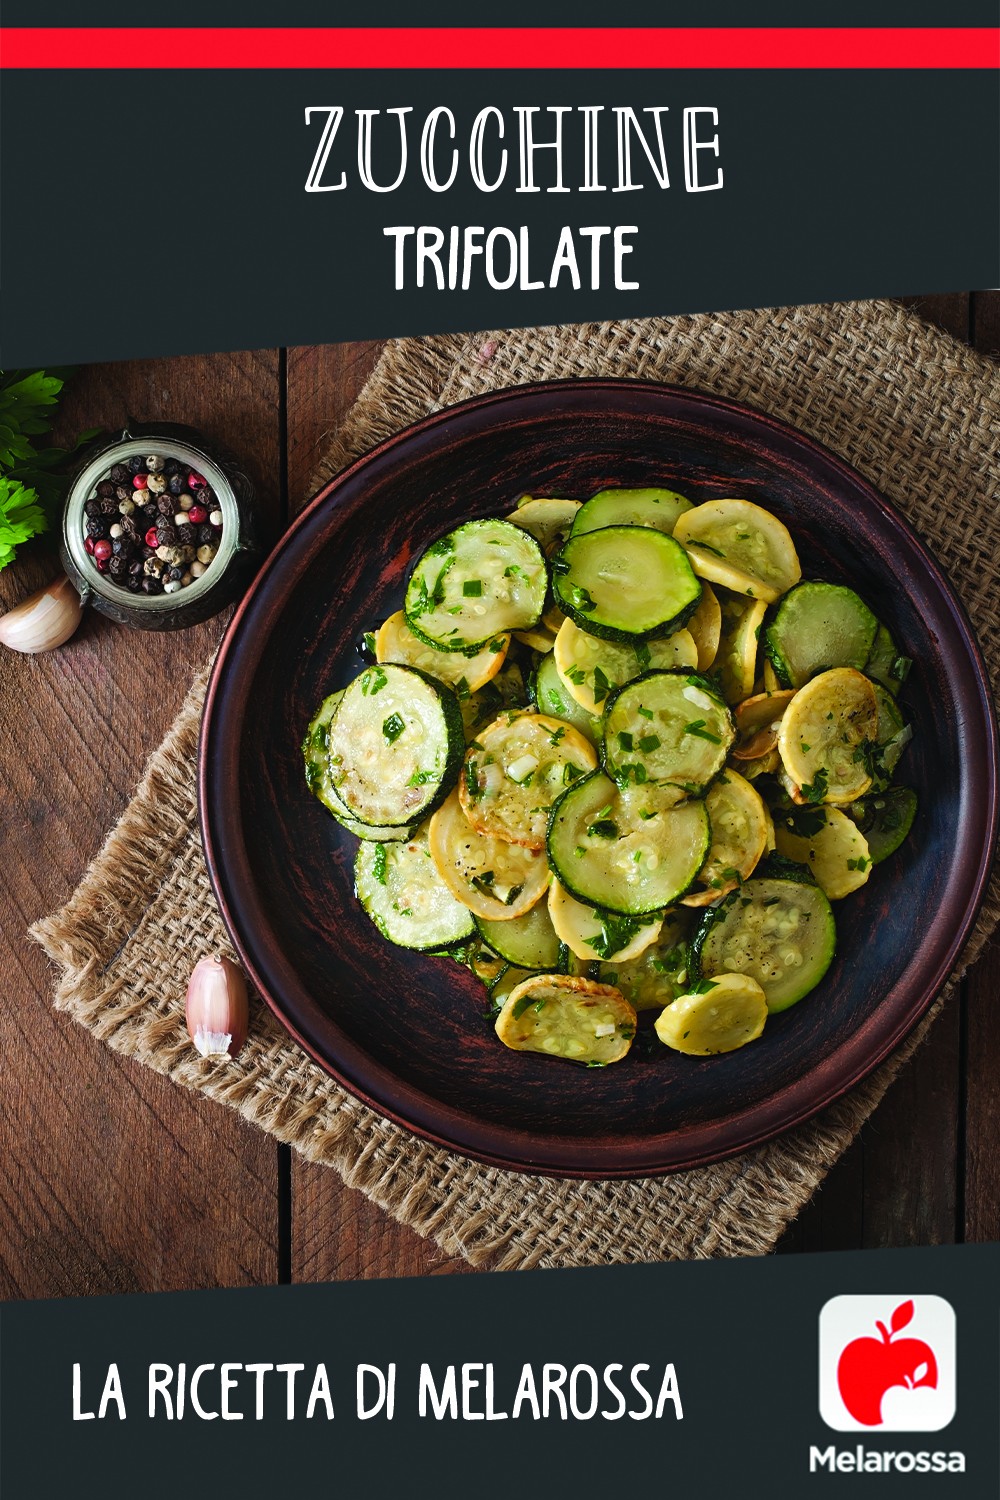 zucchine trifolate: Pinterest